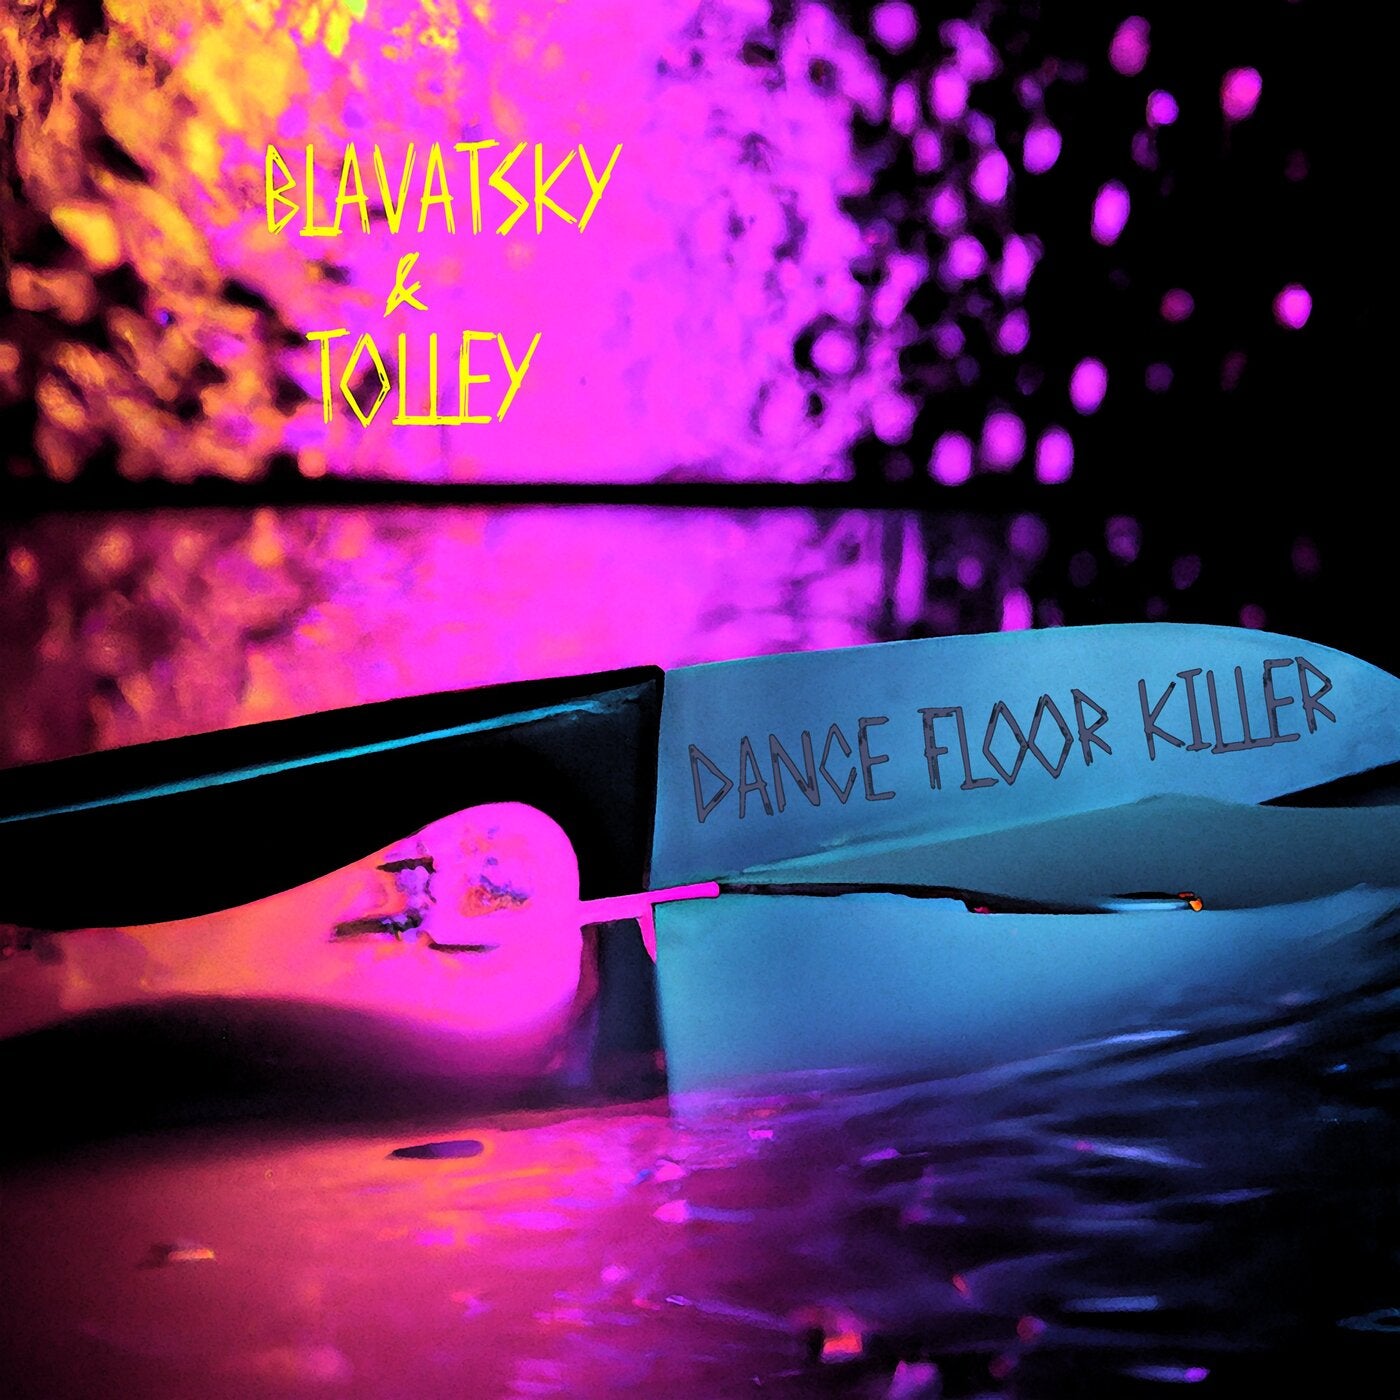 Dance Floor Killer